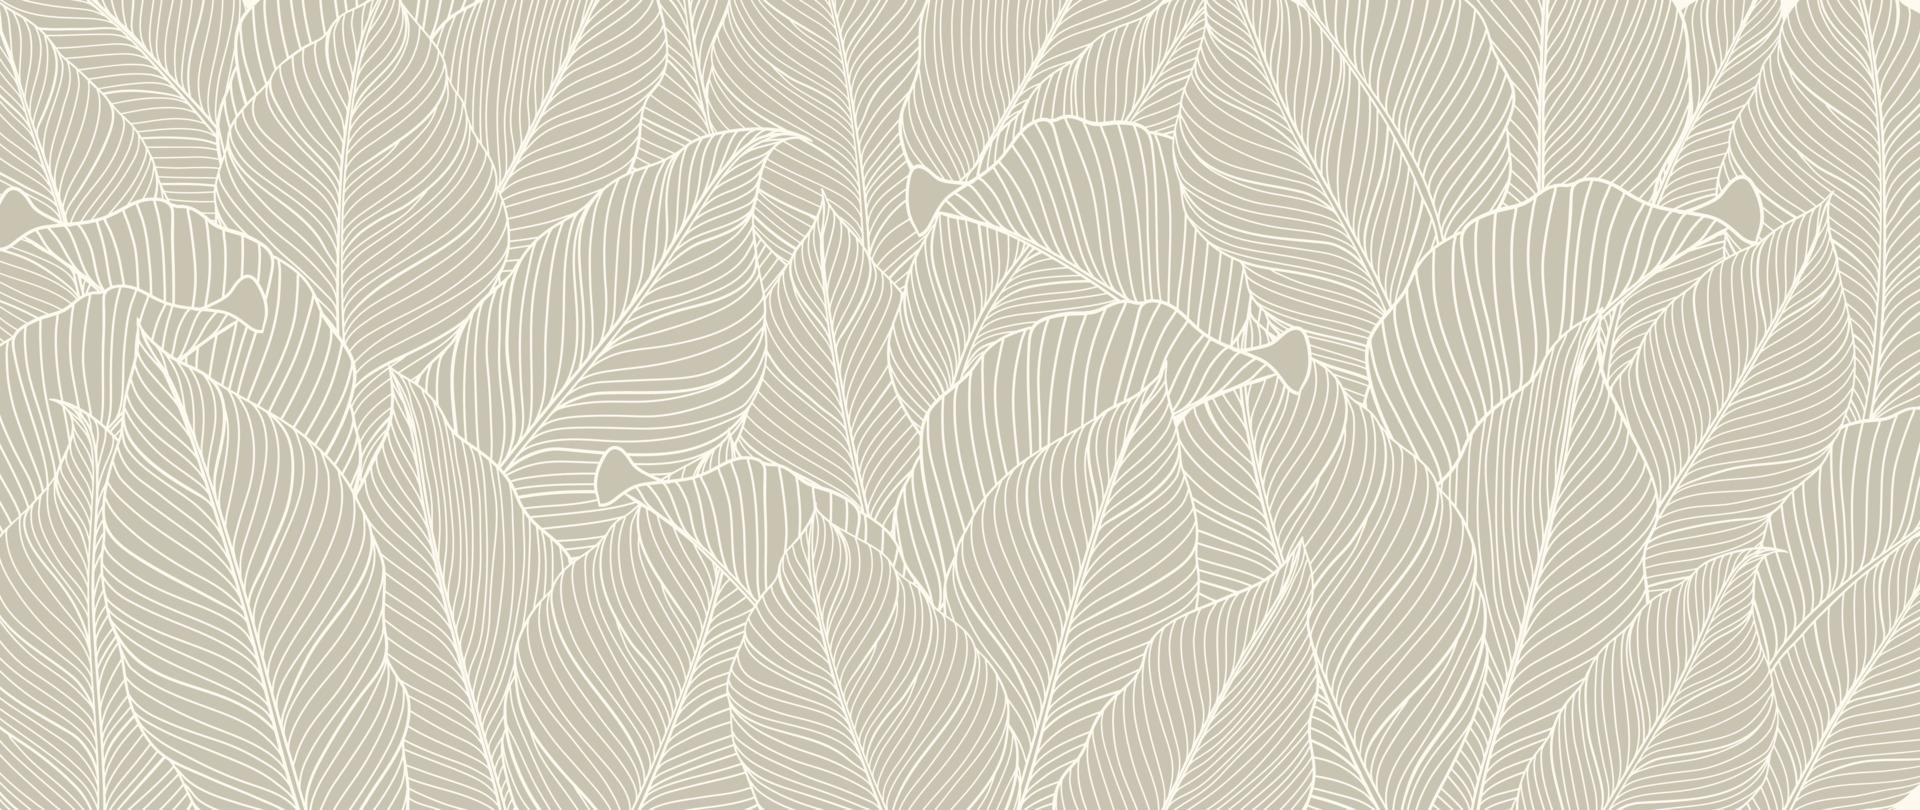 Botanical foliage line art background vector illustration. Tropical ...